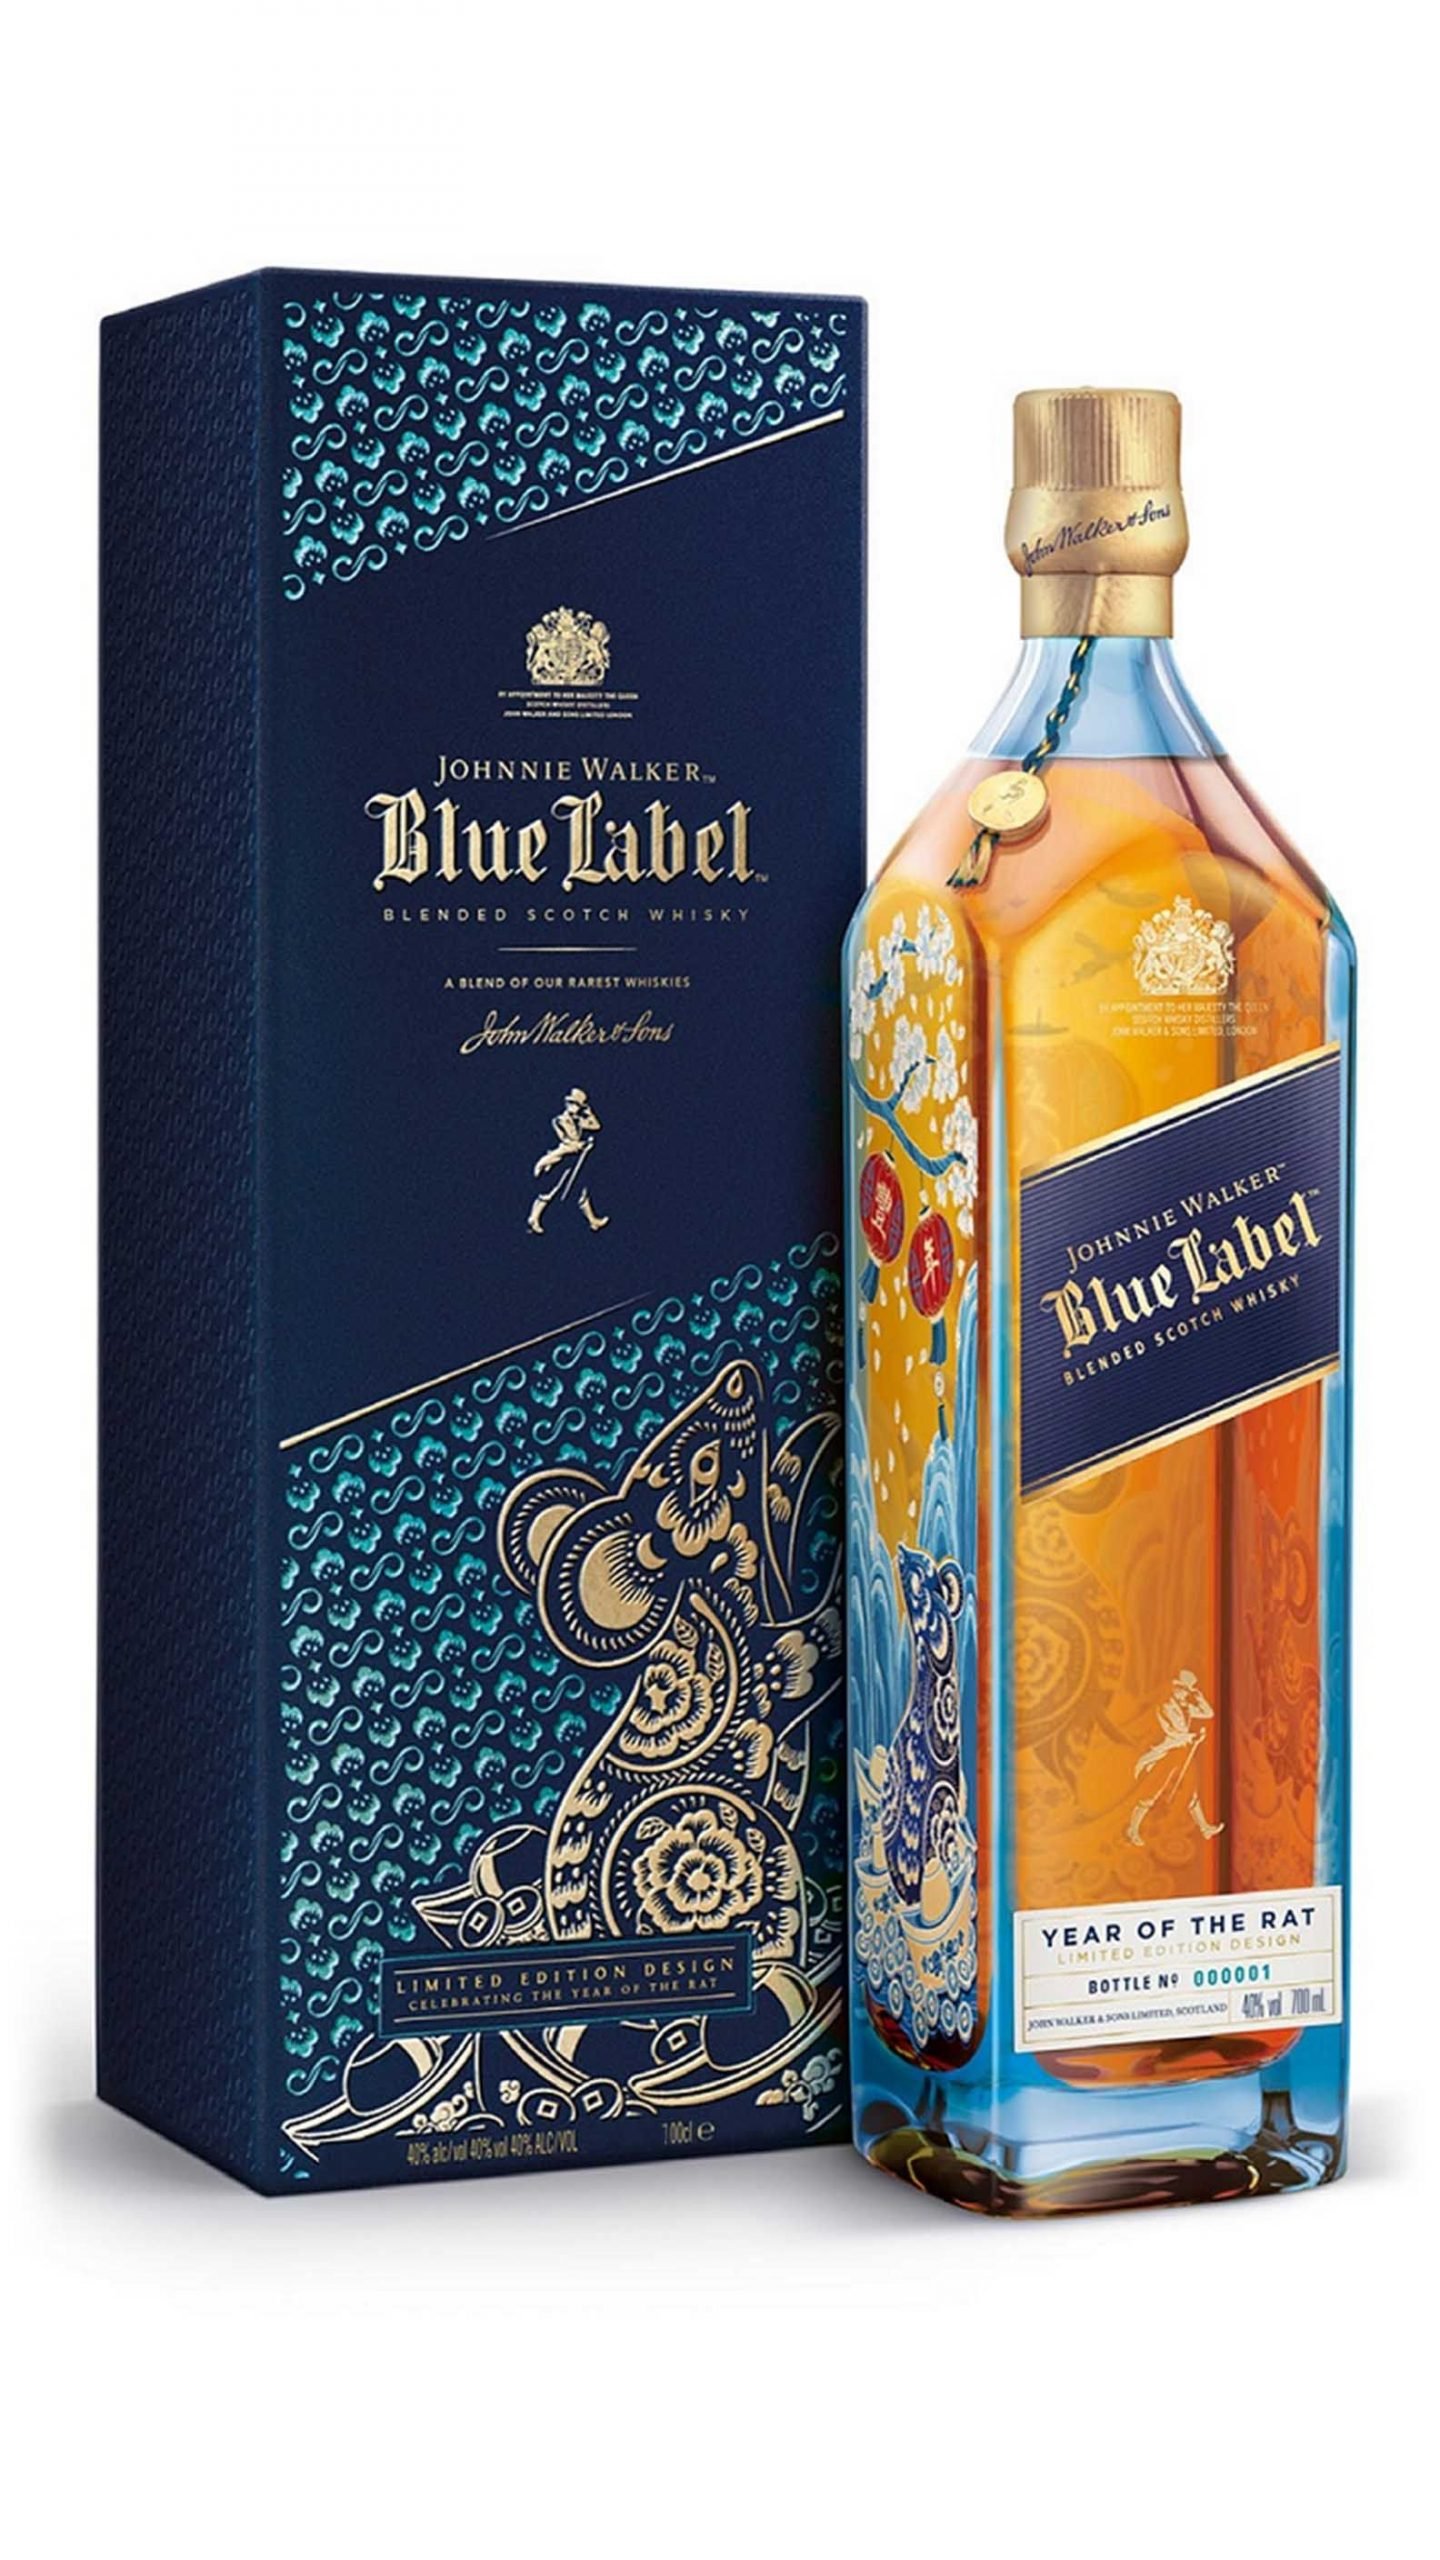 Blue Label Price in India